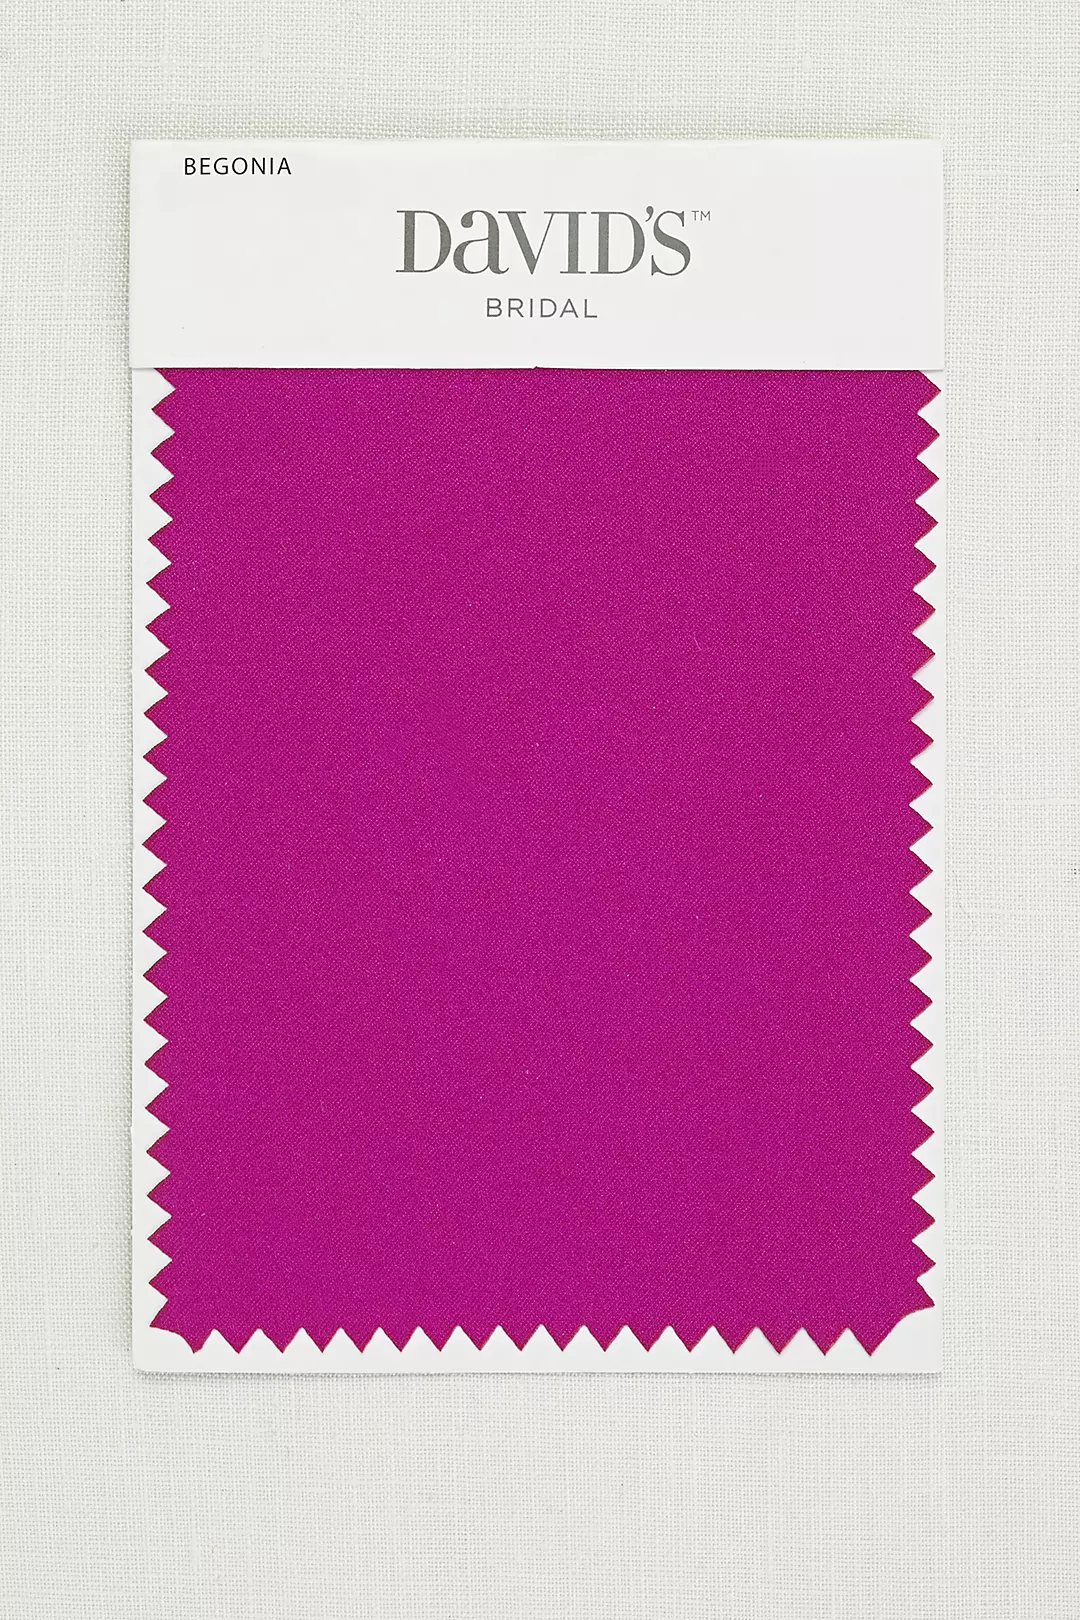 Begonia Fabric Swatch Image